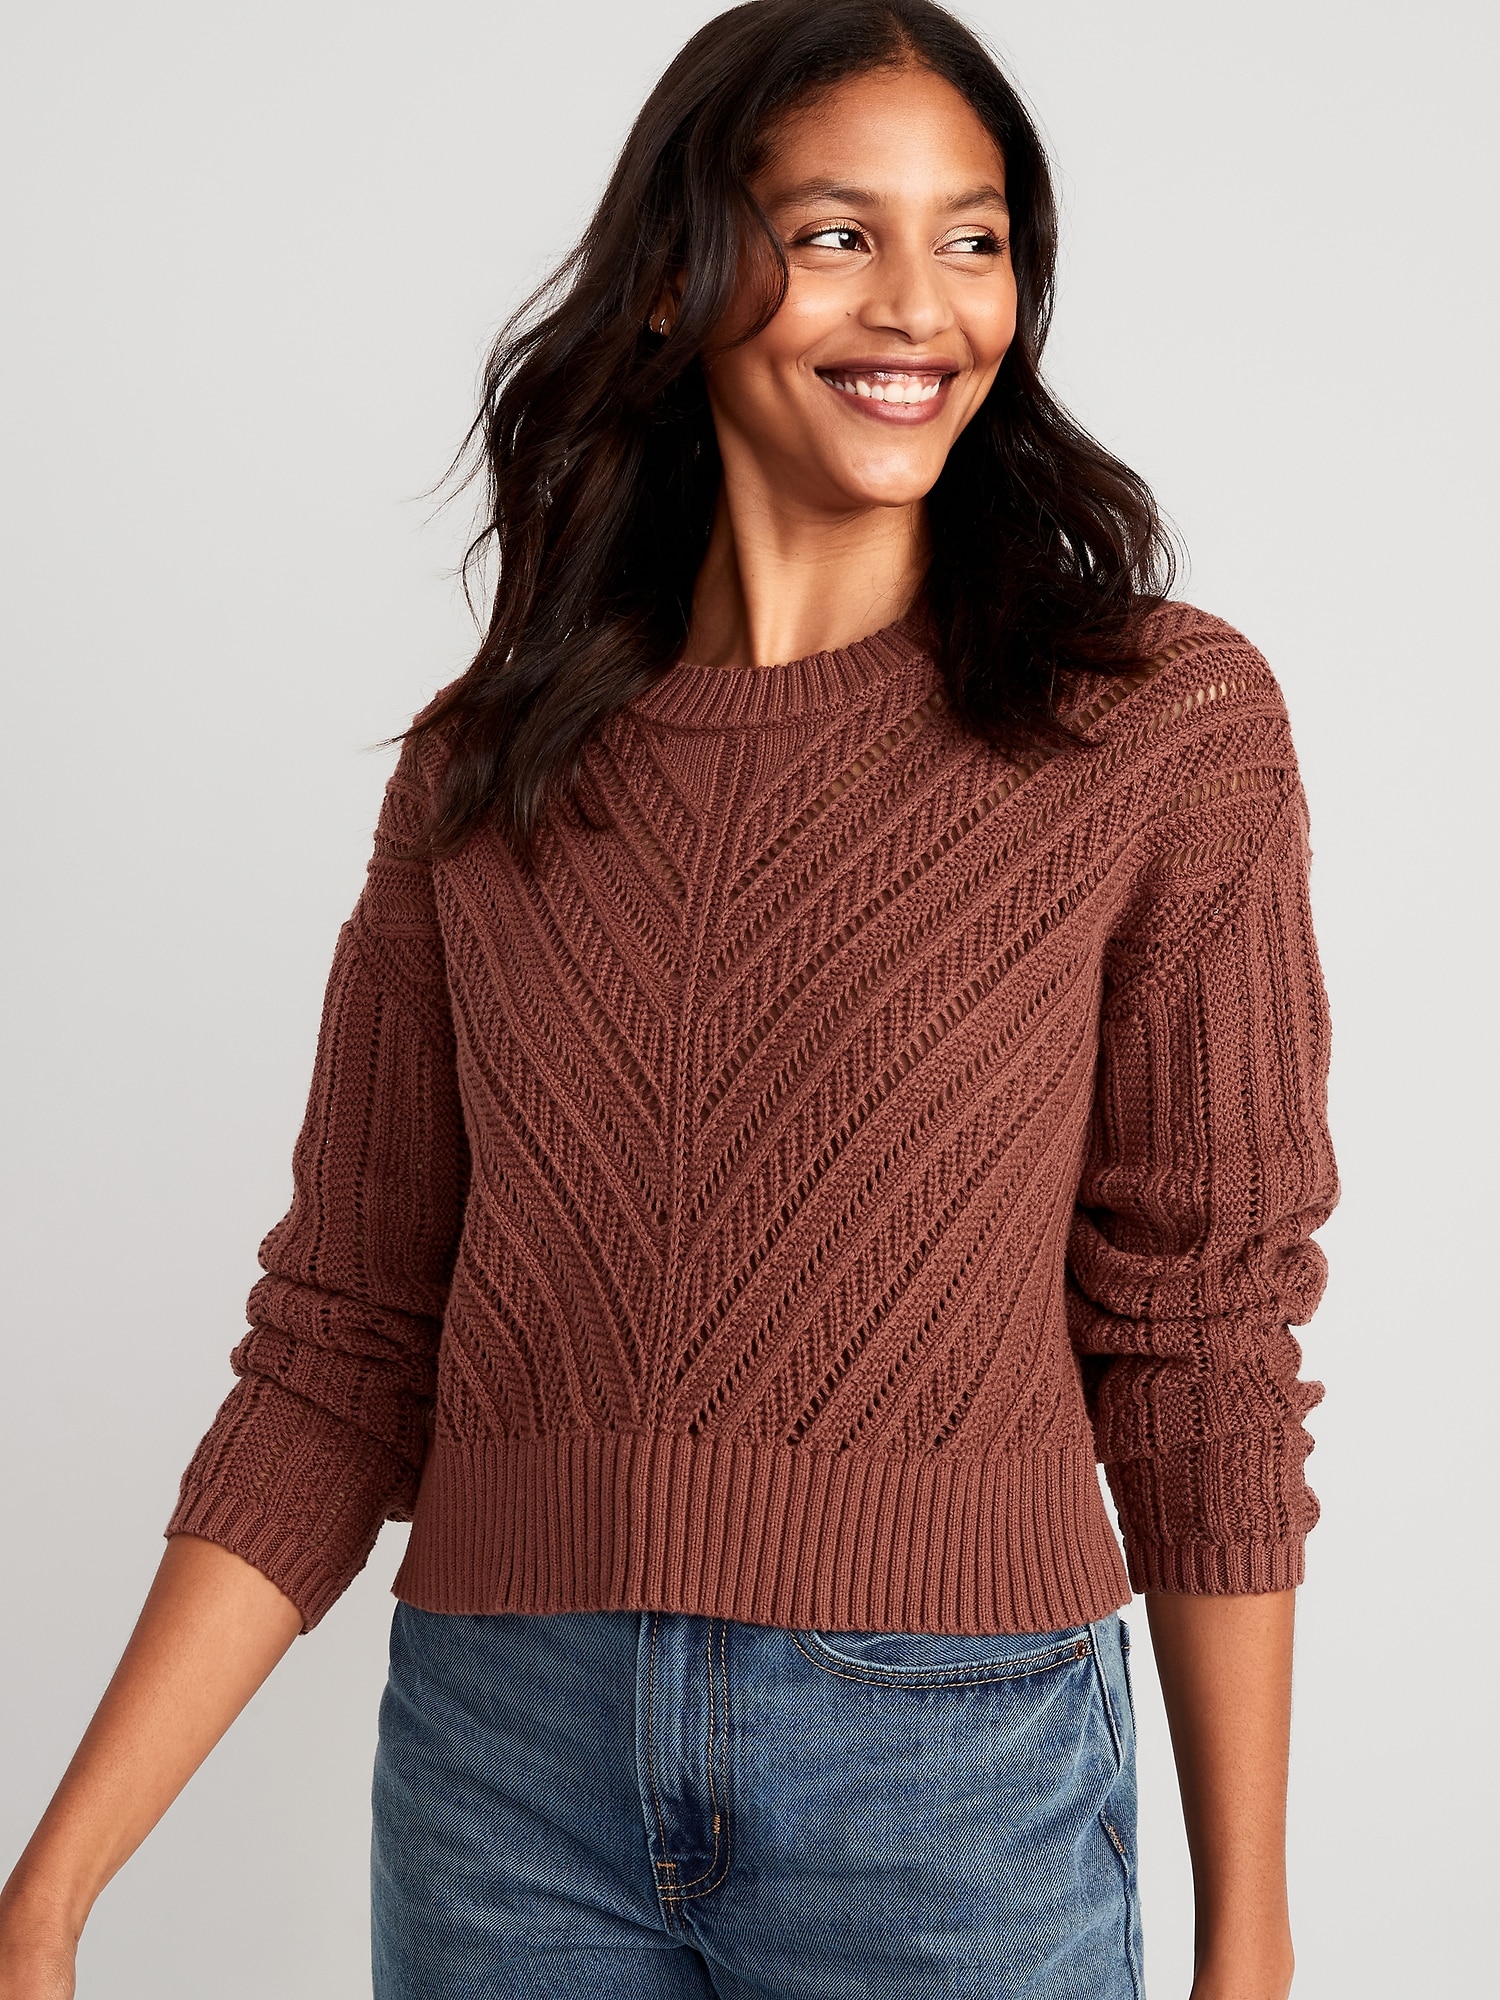 Chevron Knit Short Sleeve Sweater, Women's Tops